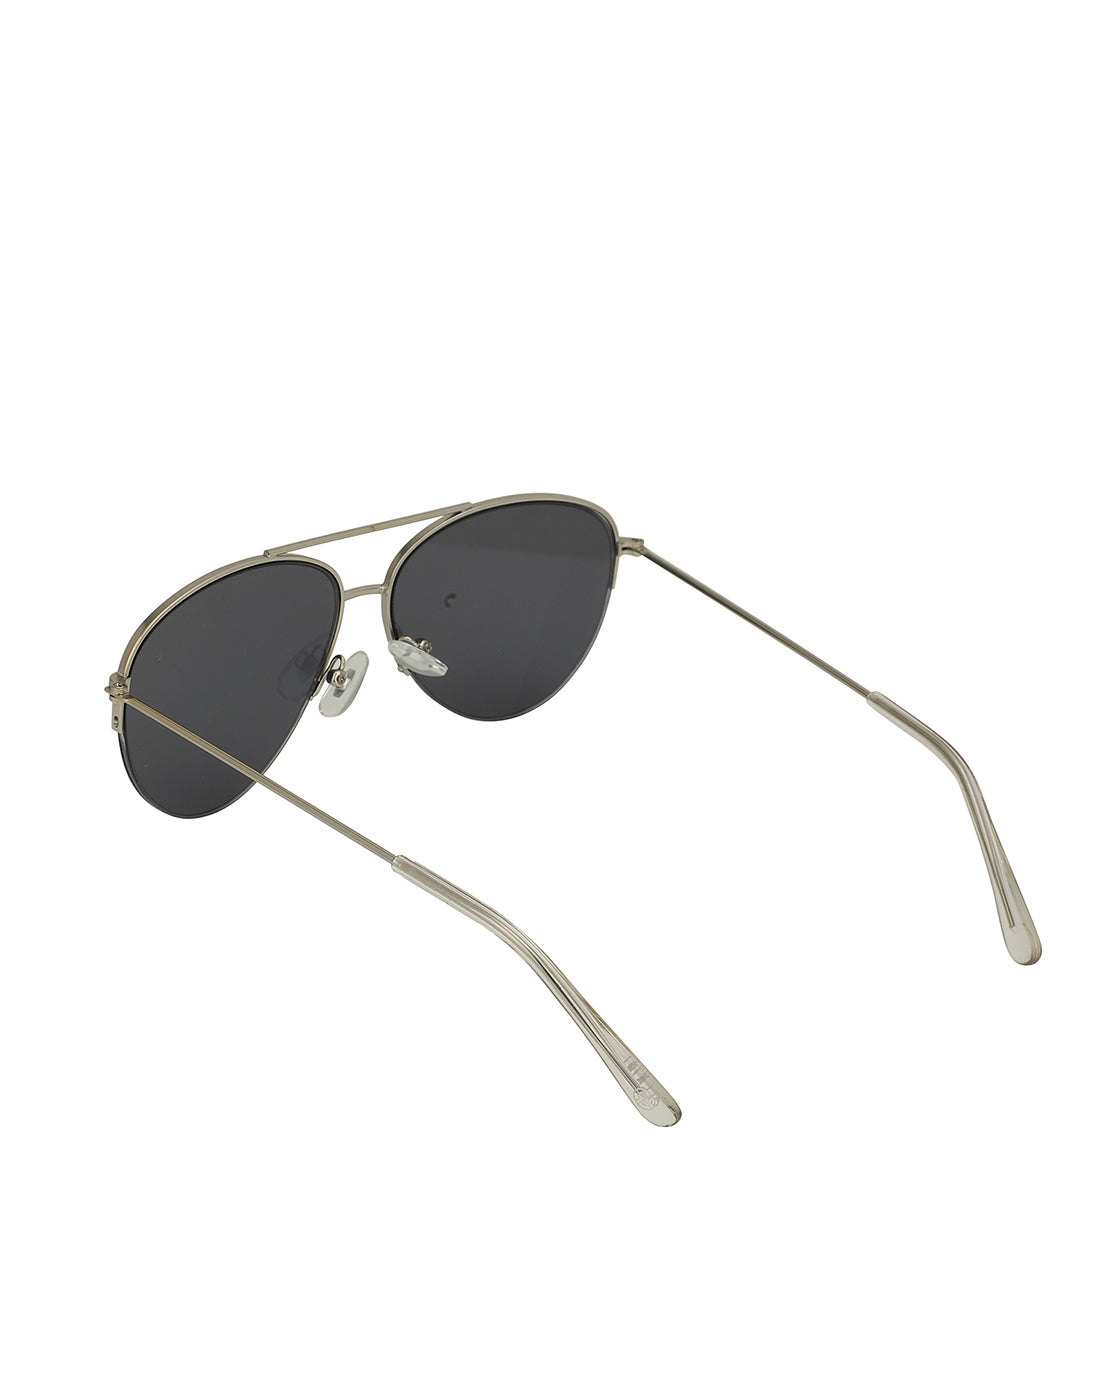 DEAFRAIN Kids Sunglasses Polarized TPEE Frame UV India | Ubuy